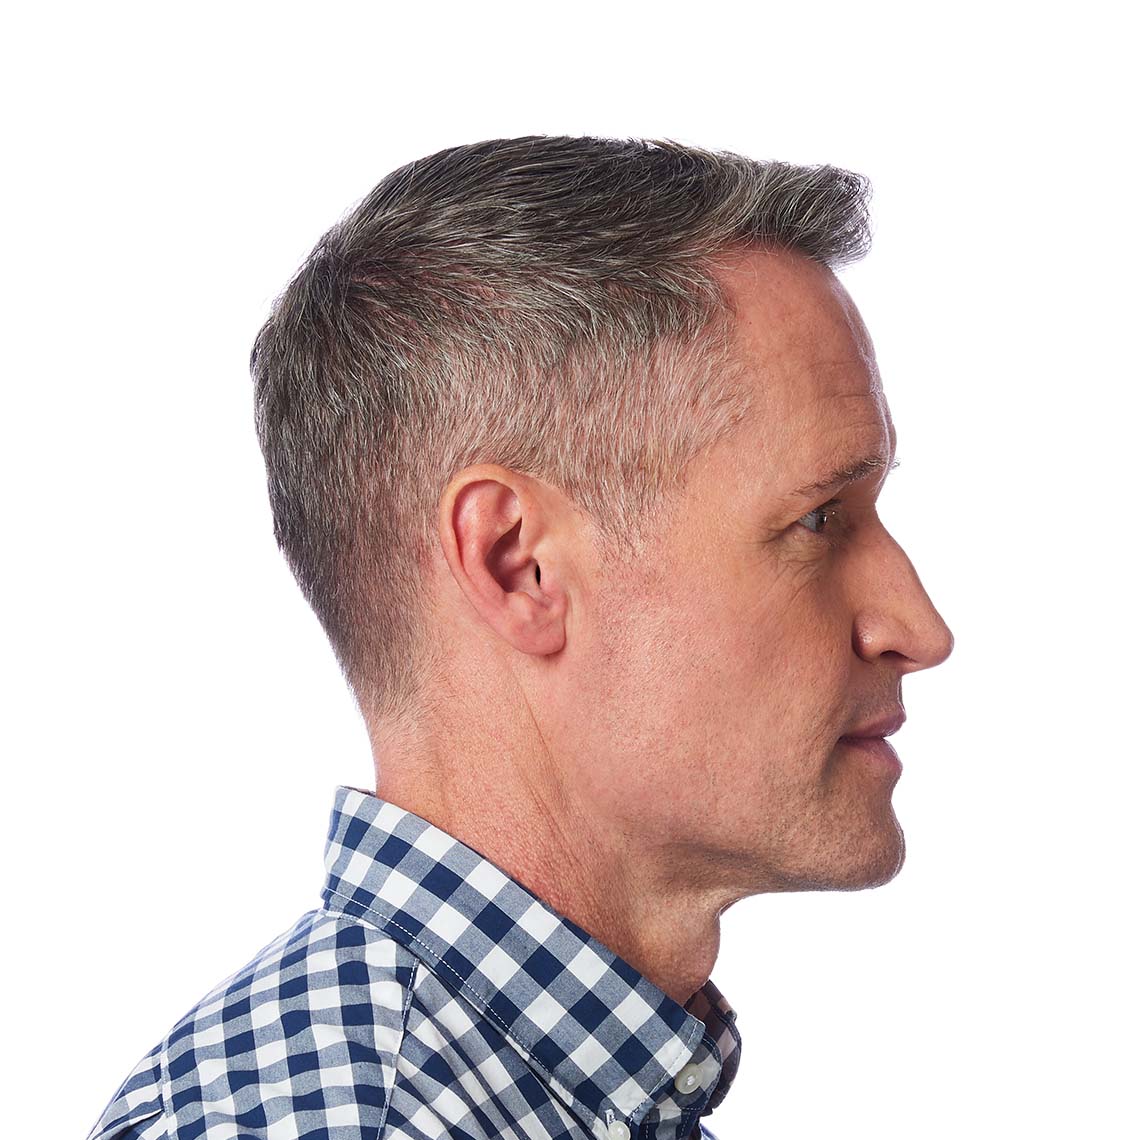 An IIC hearing shown in a man's ear